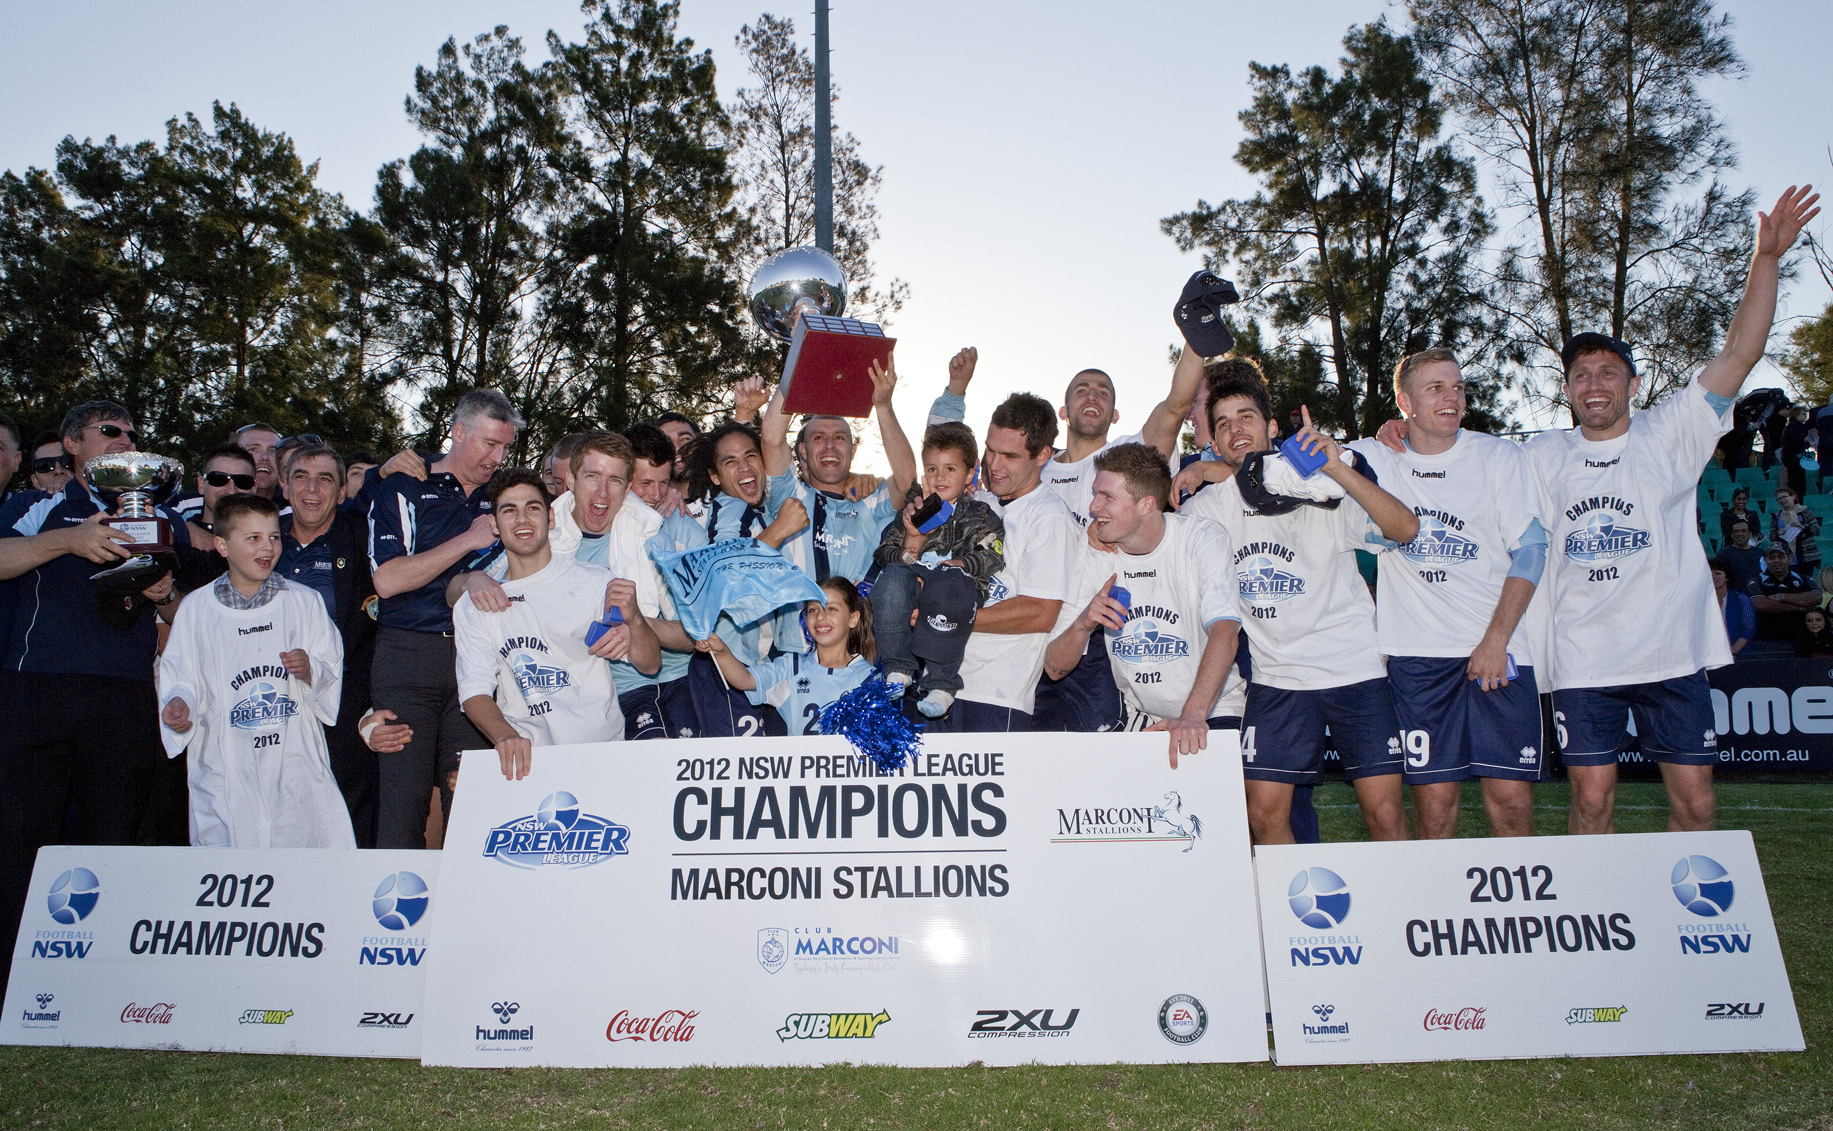 Marconi Stallions - Champions 2012